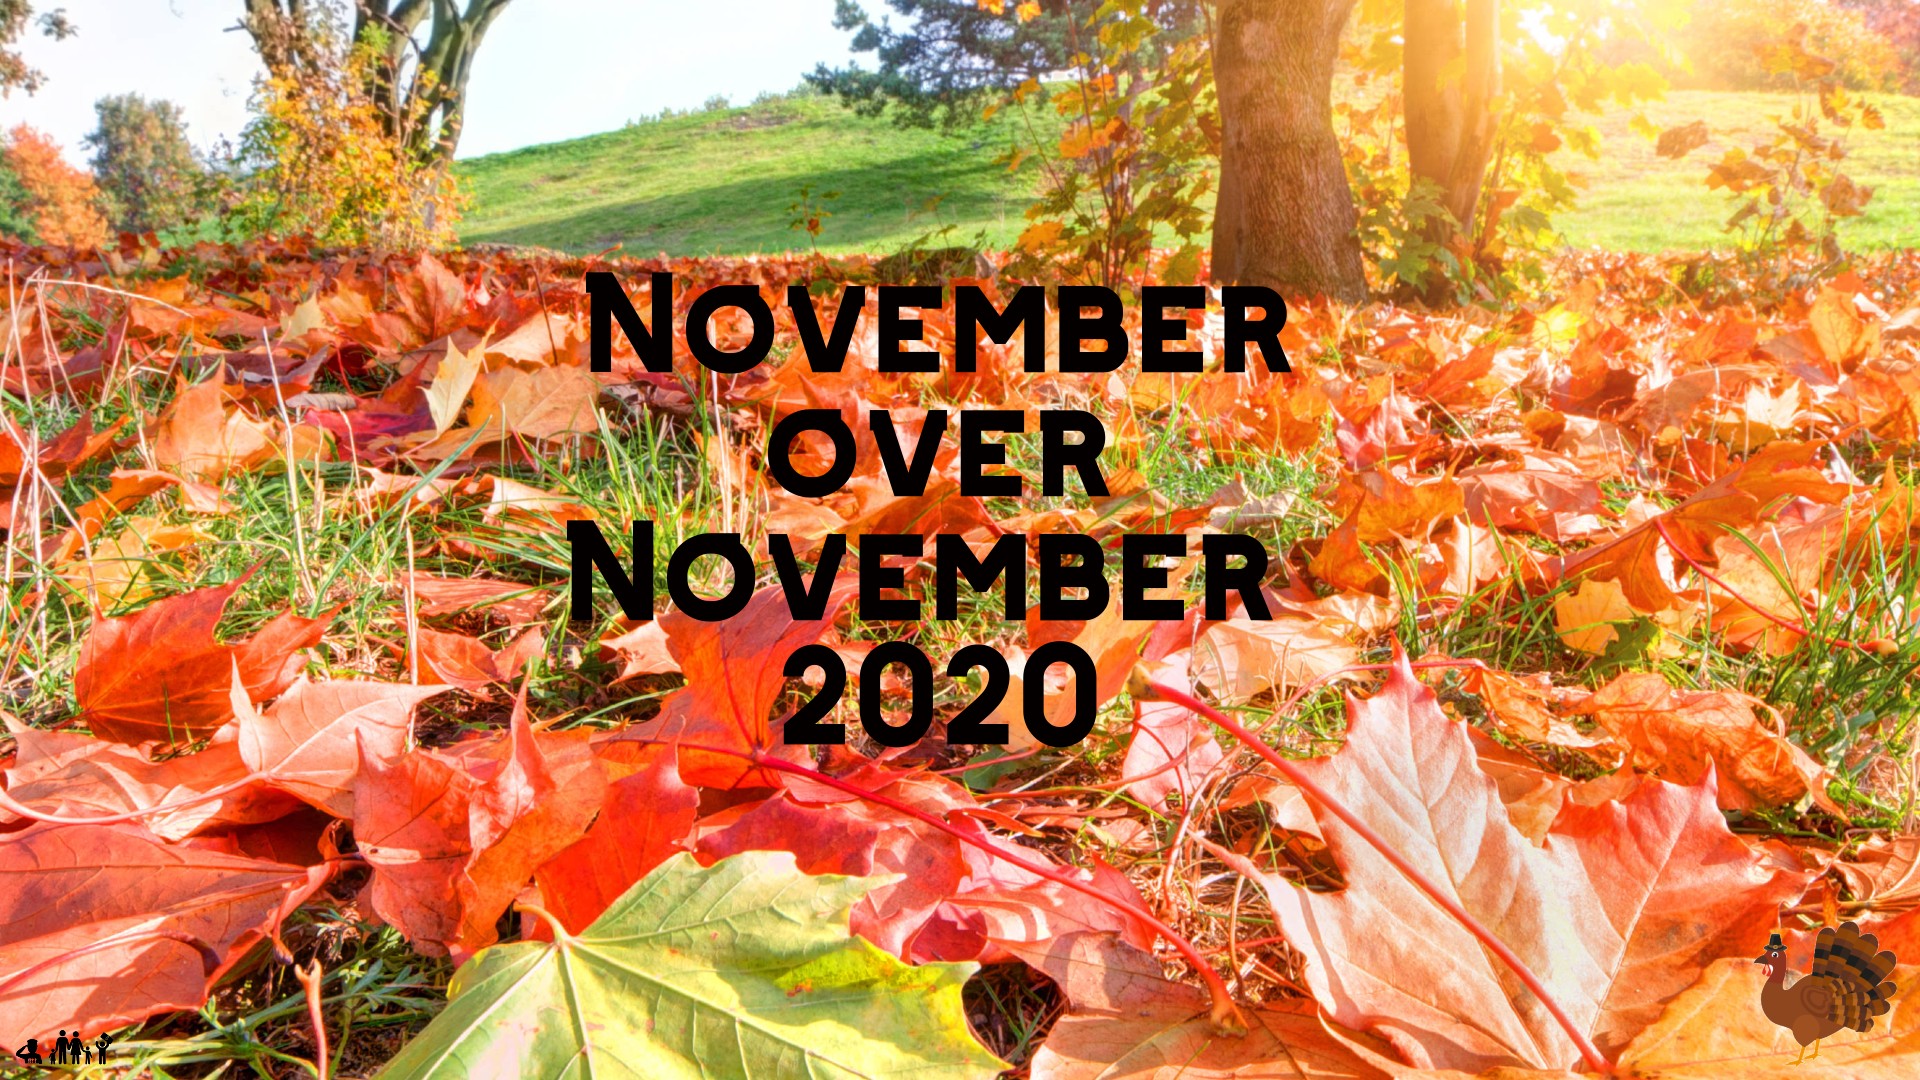 November over November 2020